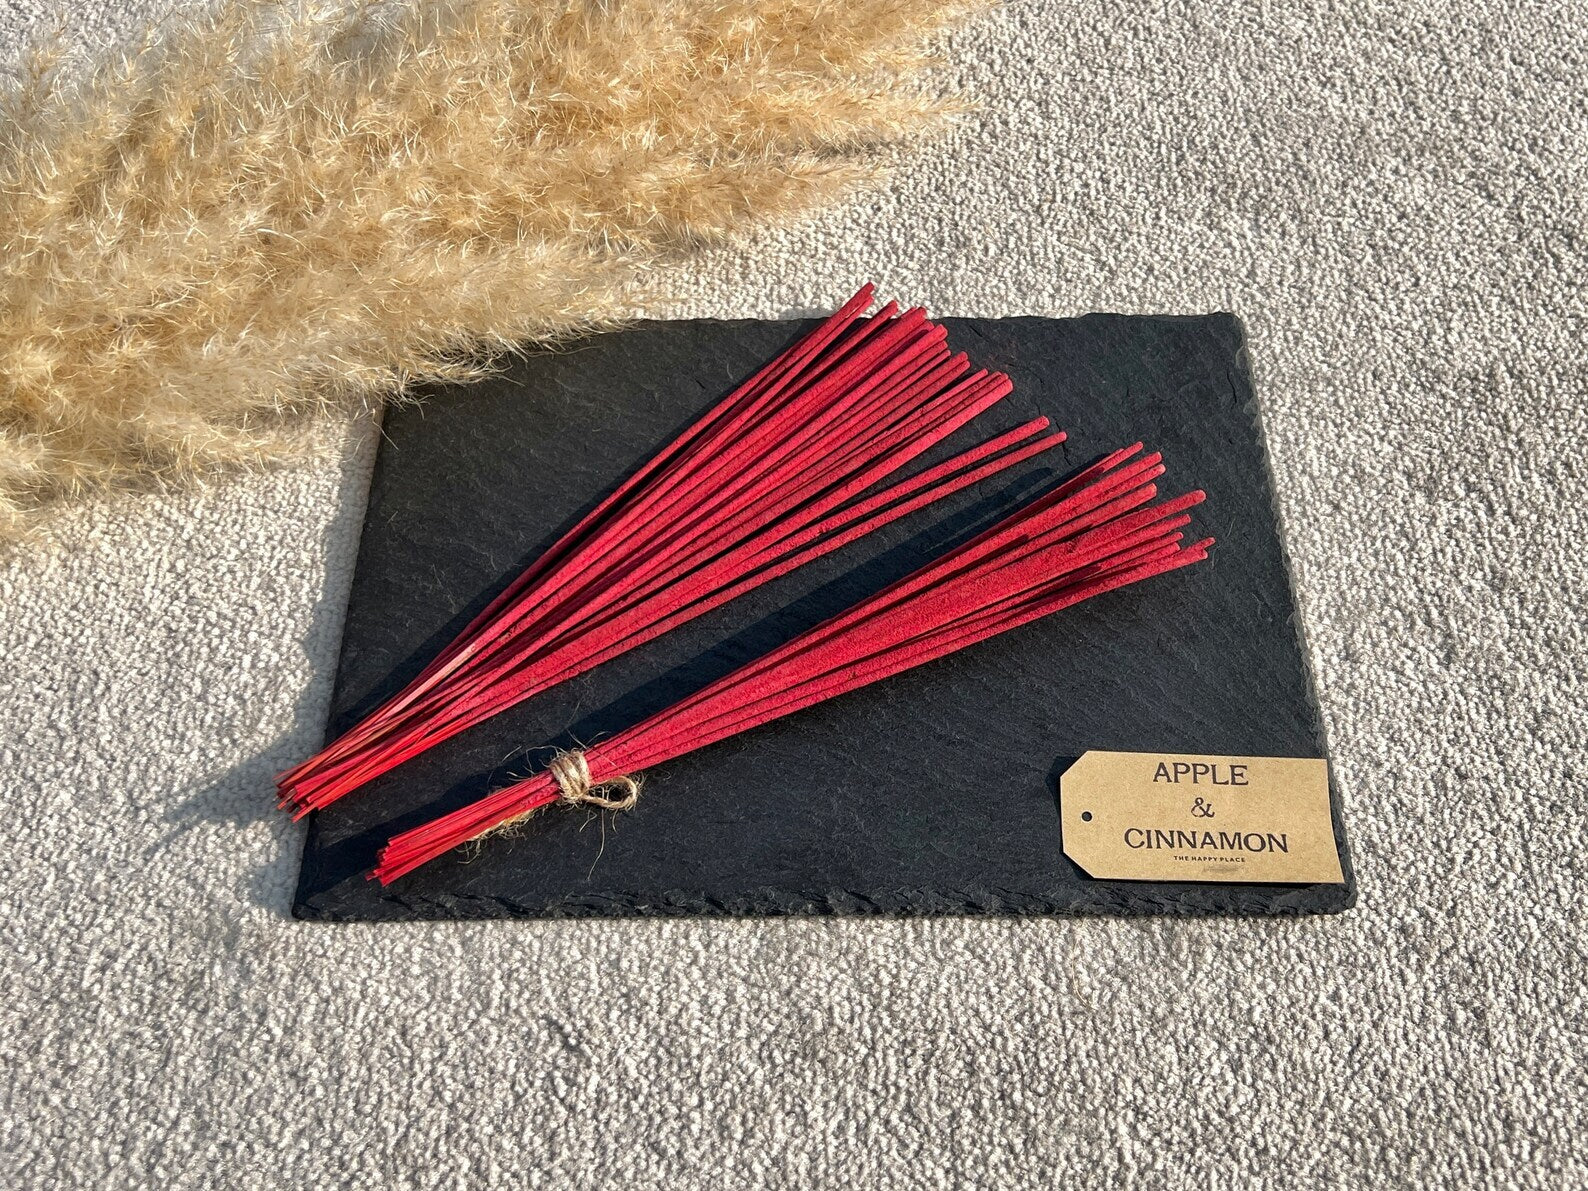 Apple & Cinnamon Incense Sticks - Hand Rolled Incense - Bamboo Incense Sticks